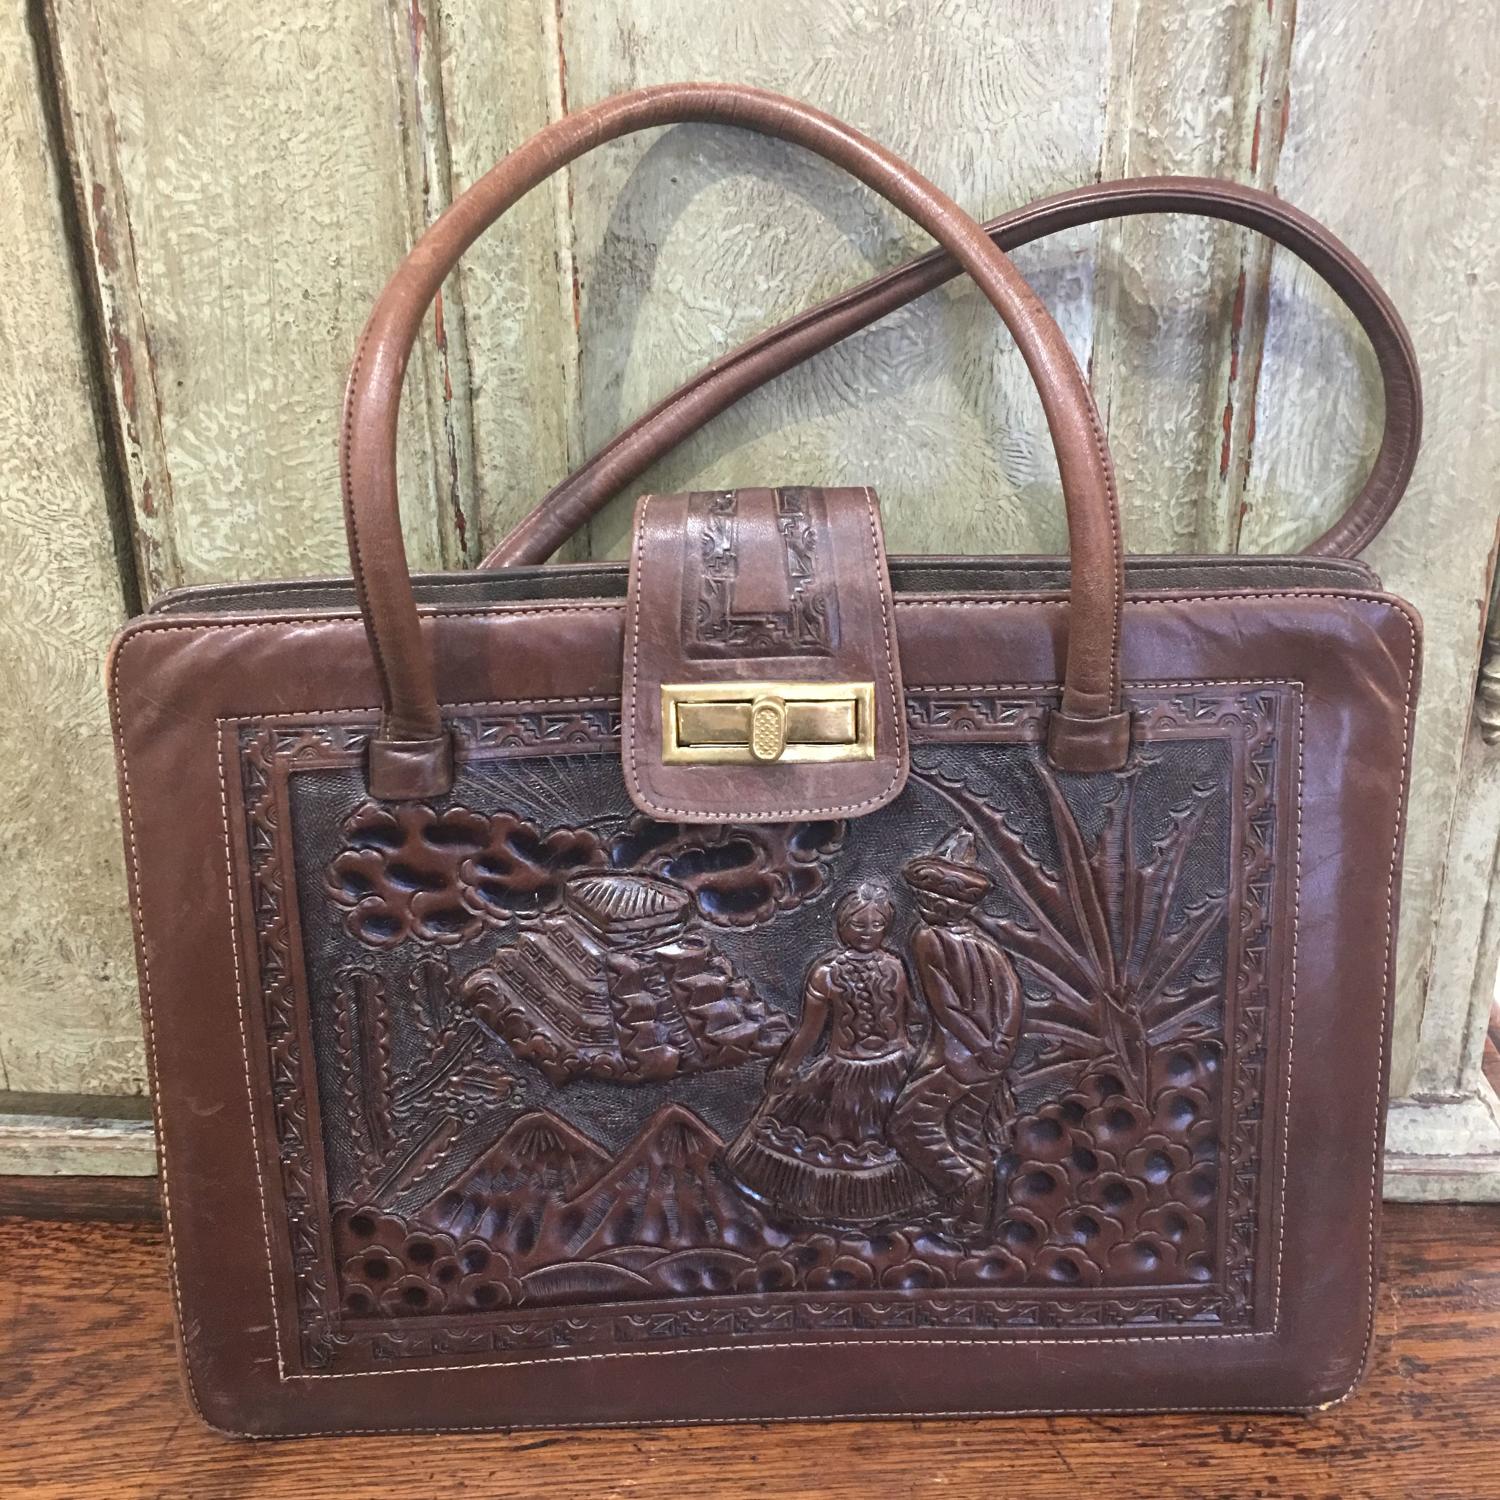 1950s Mexican handbag